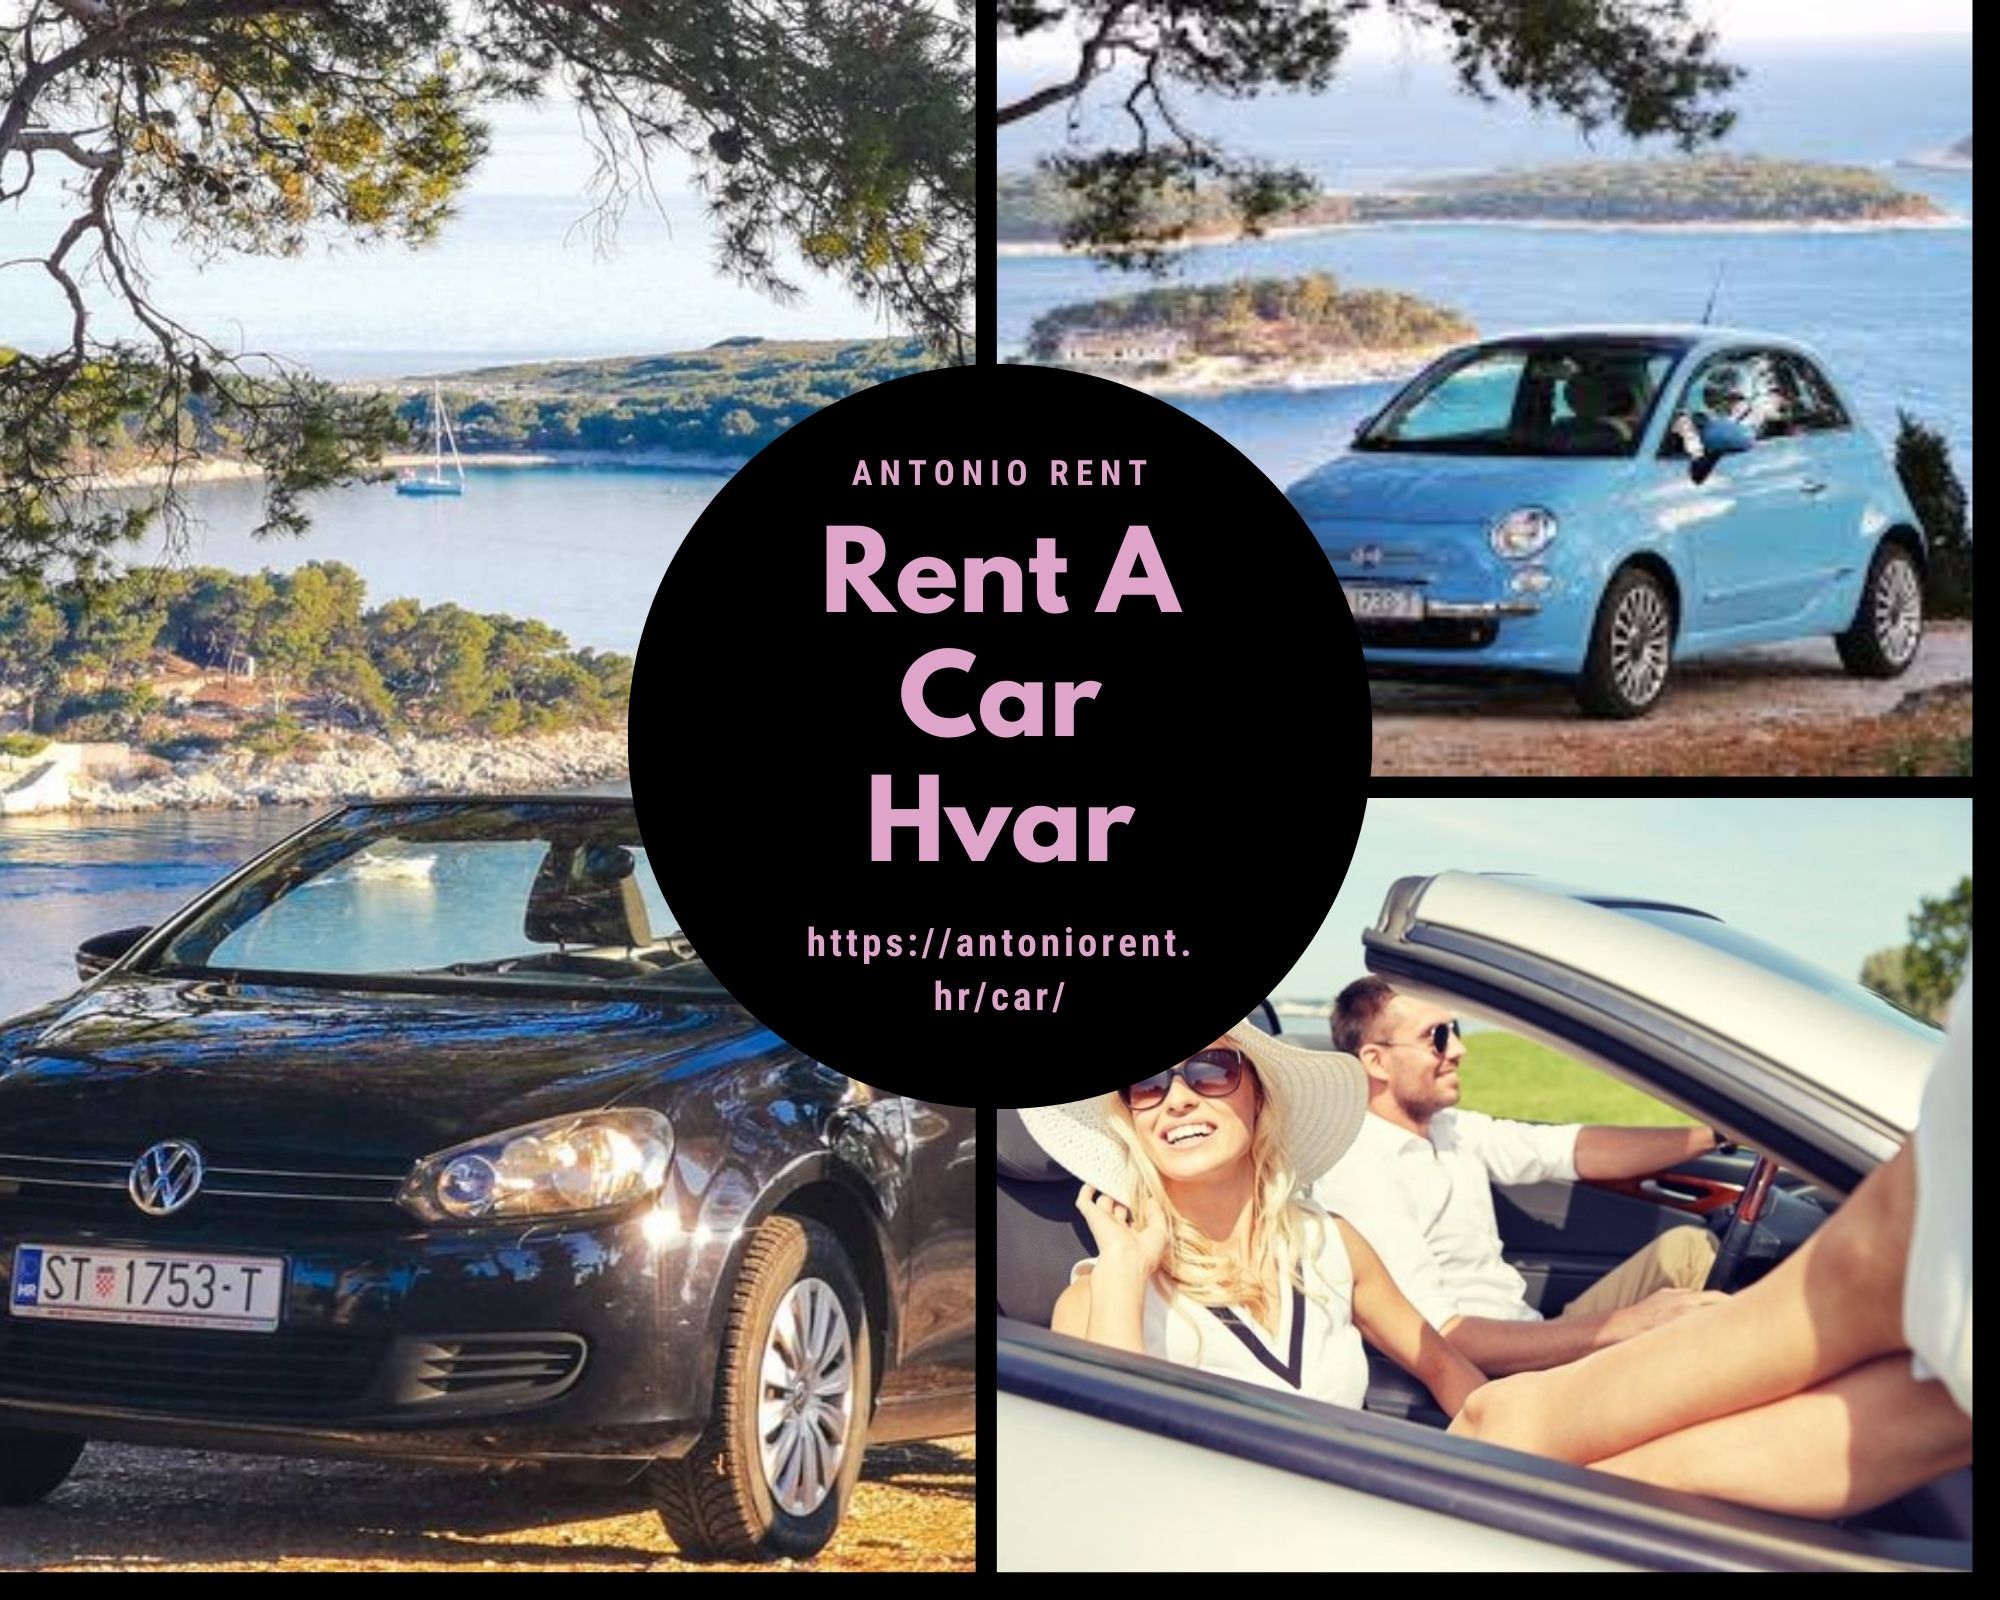 Rent A Car Hvar- Antonio Rent